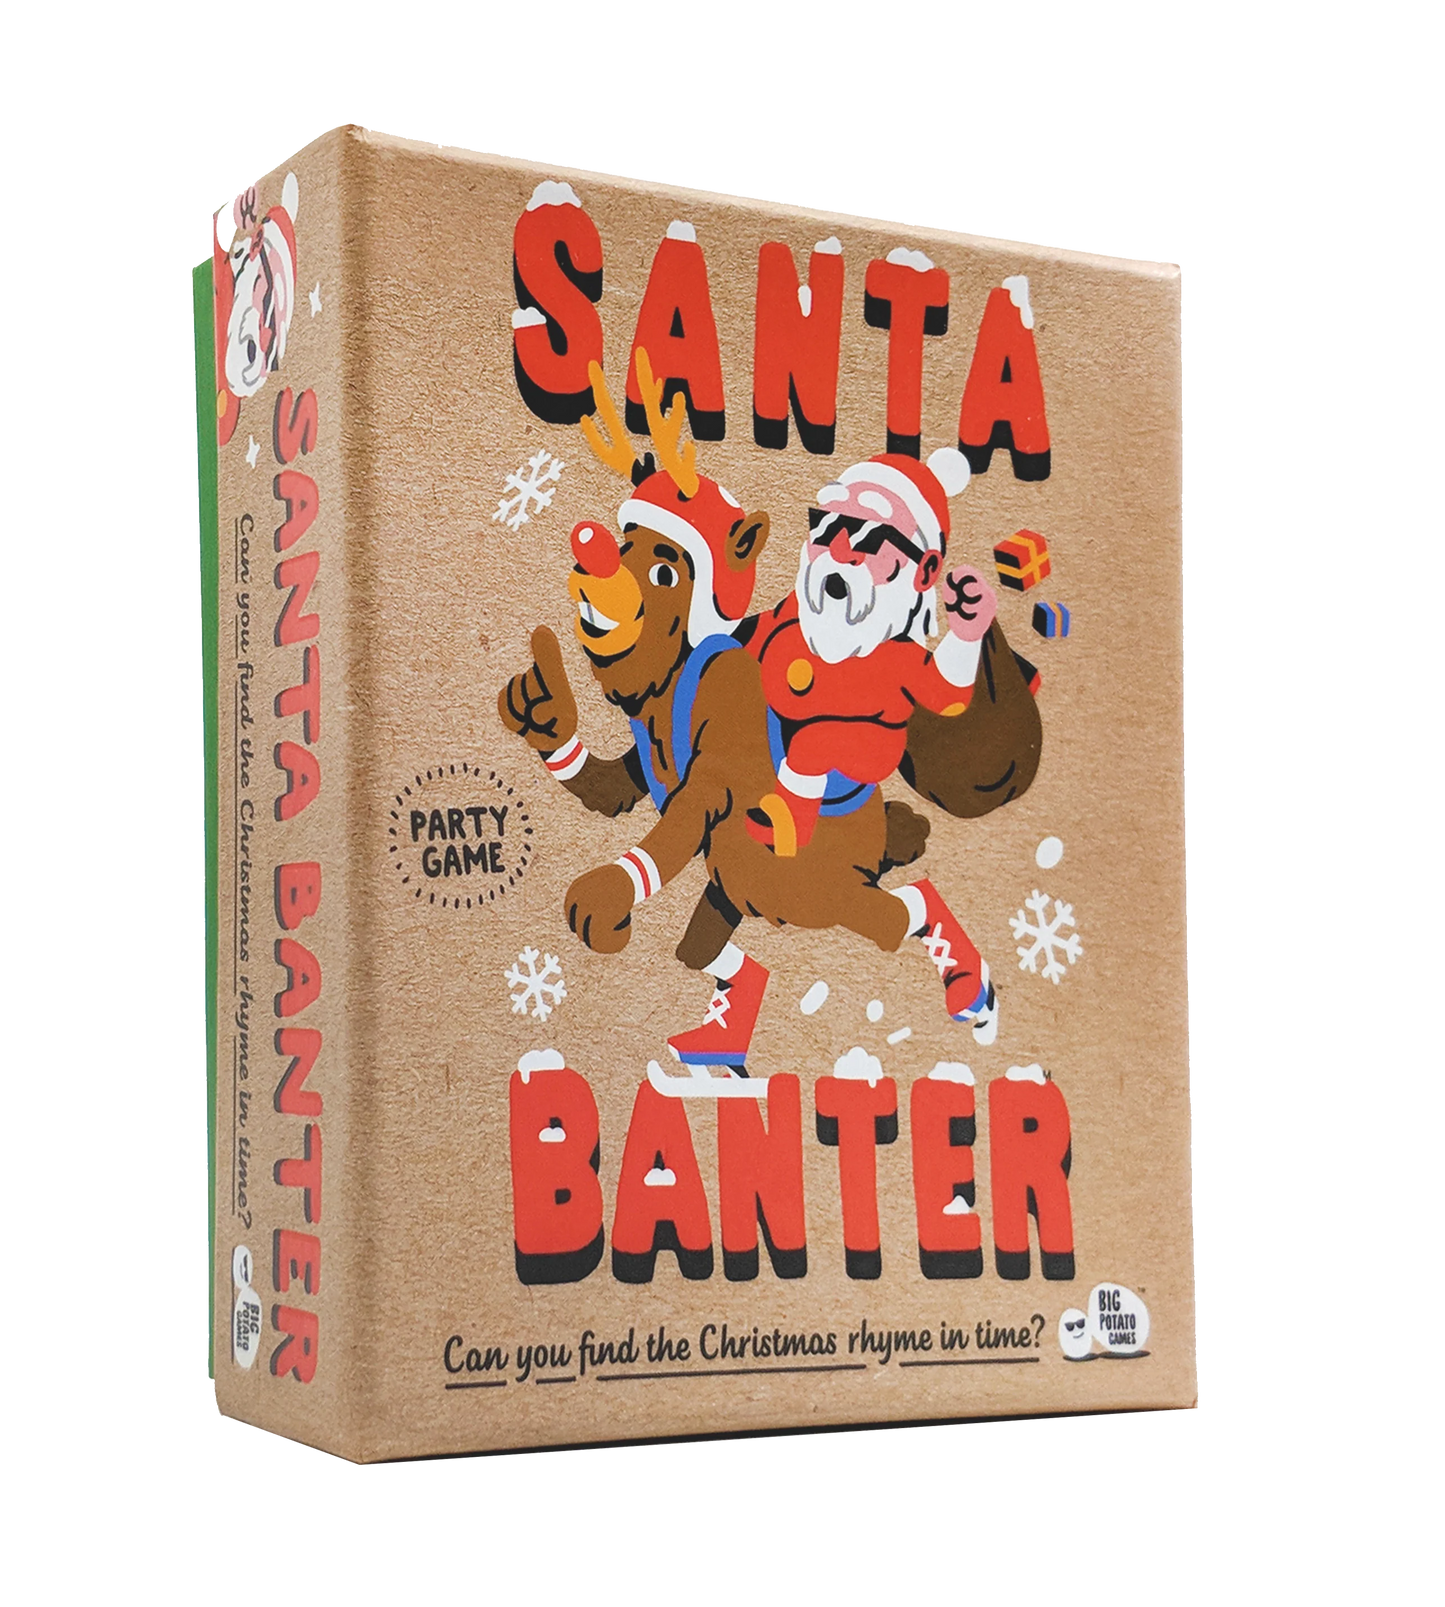 Santa Banter Festive Rhyming Charades game by Big Potato Games